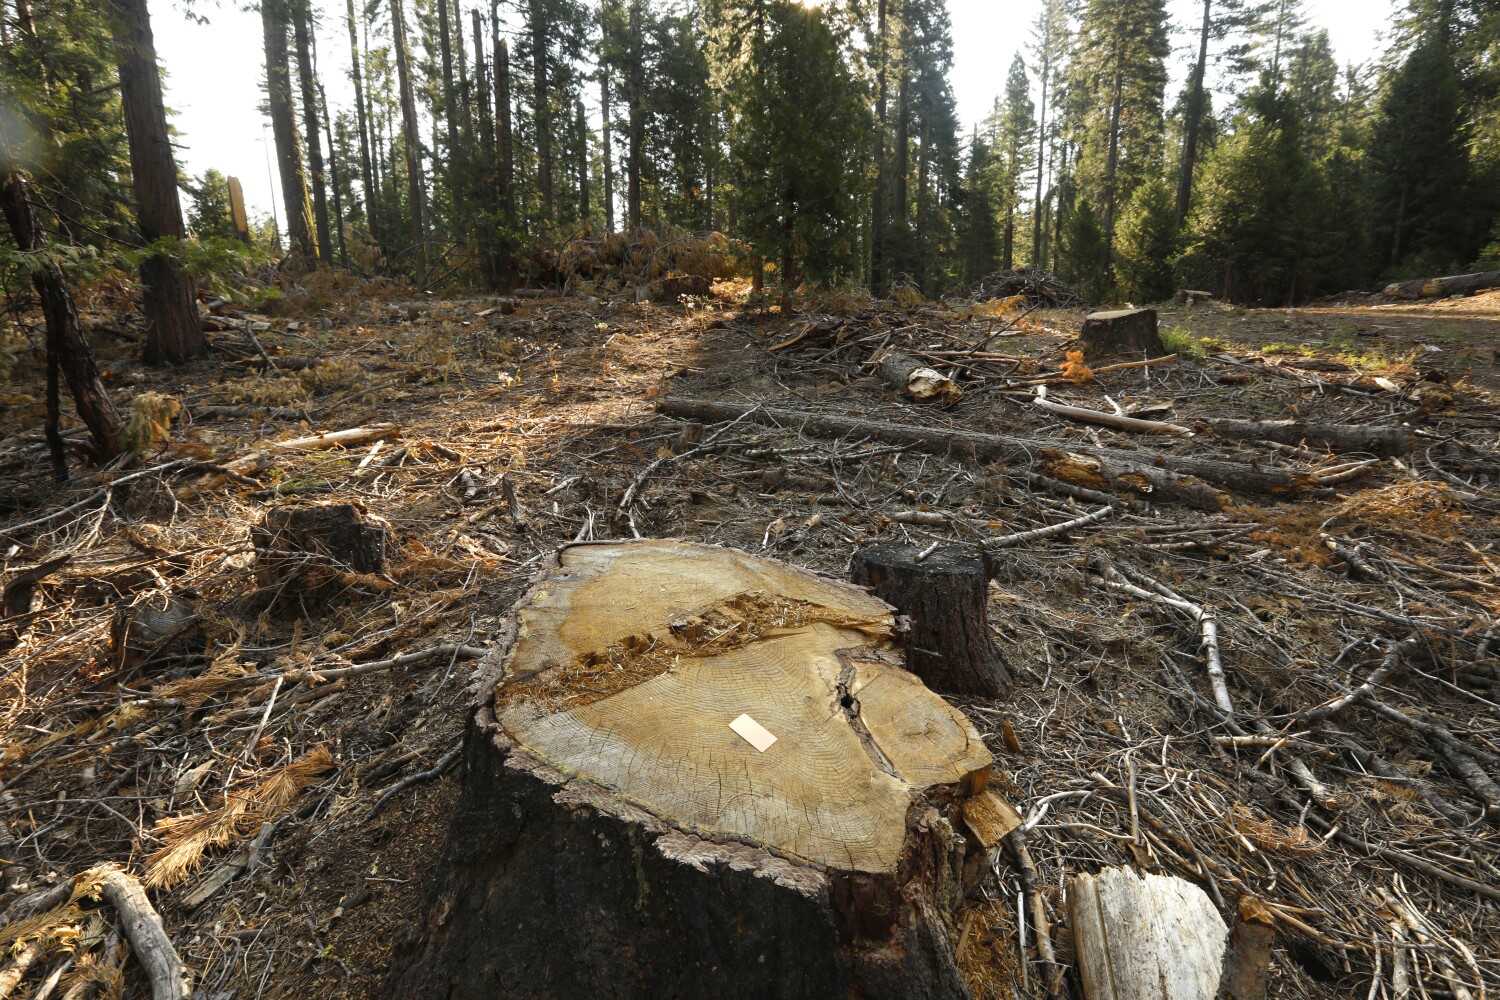 Yosemite National Park logging project halted after lawsuit